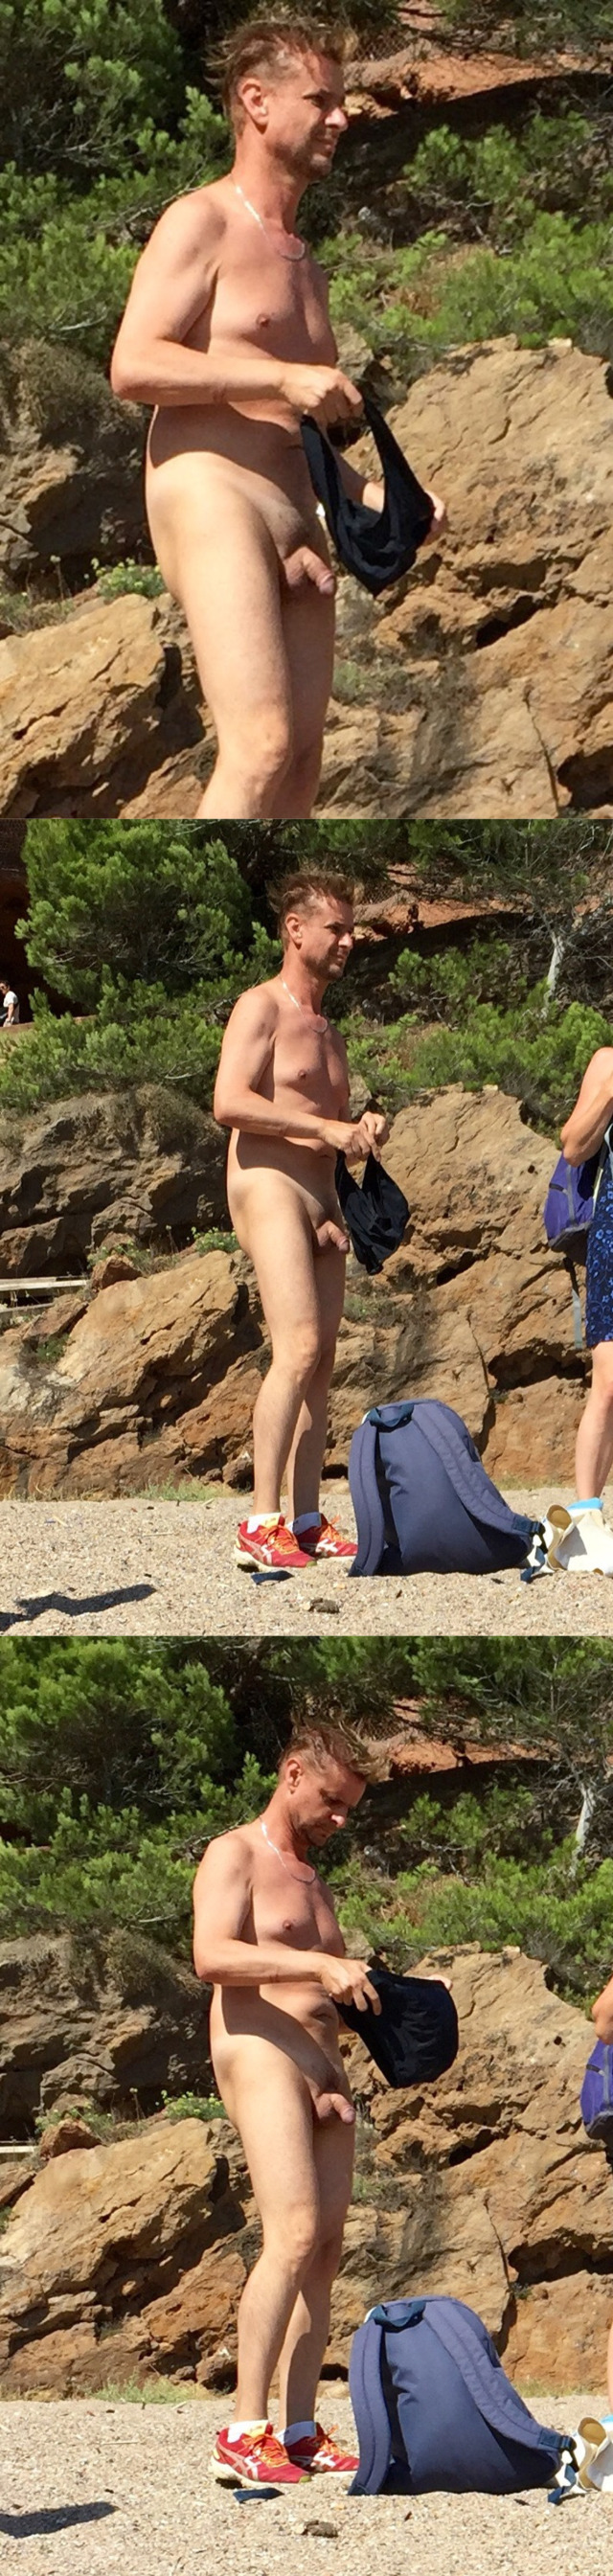 nudist beach spycam voyeur naked